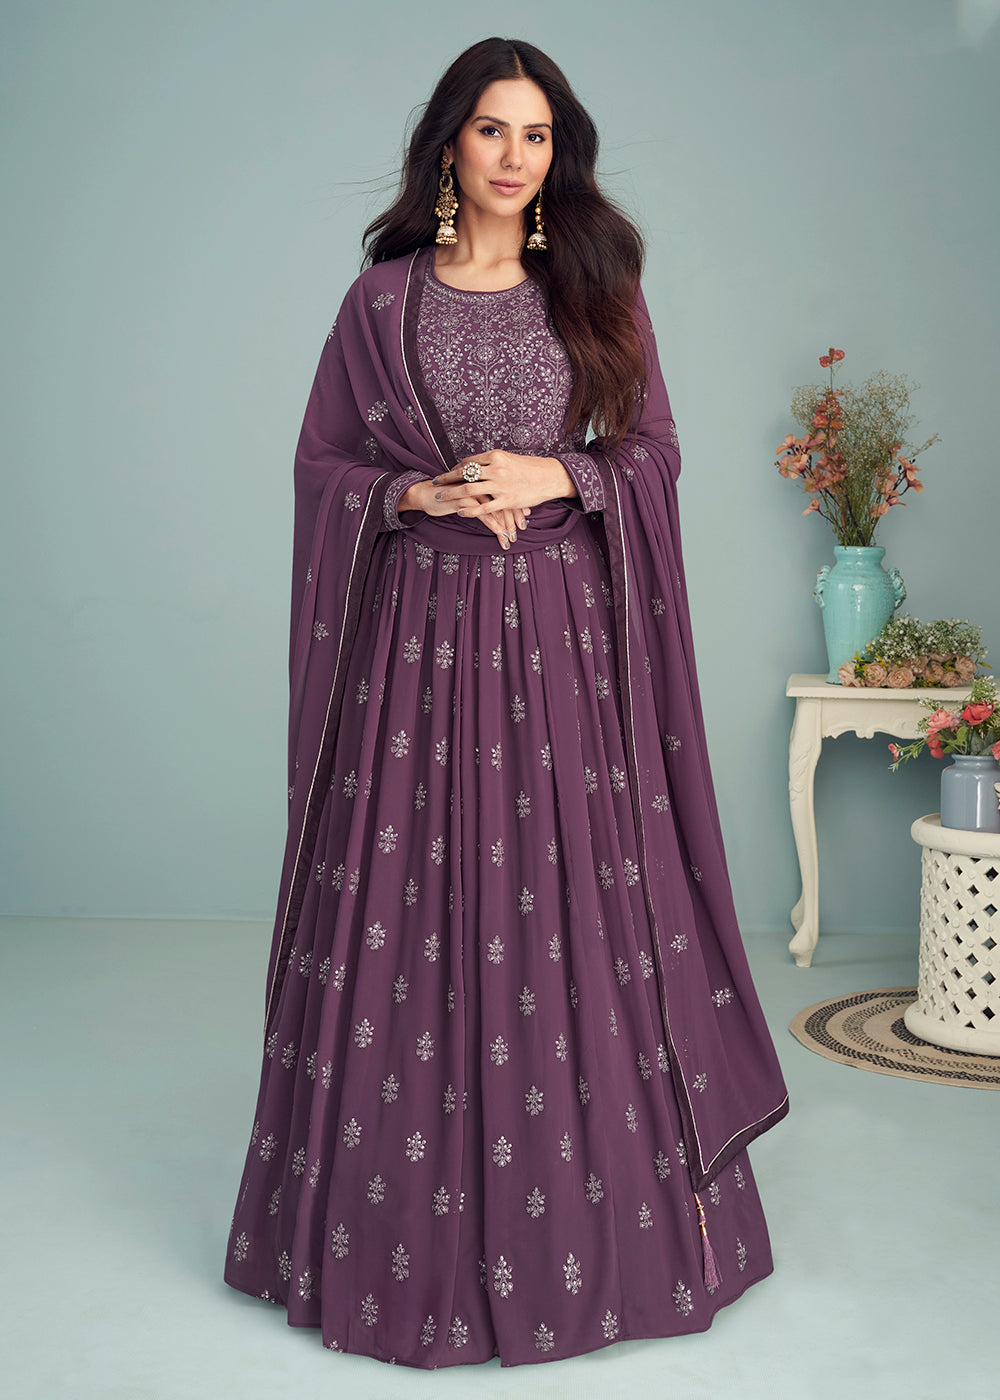 Shop Now Dusty Purple Georgette Embellished Wedding Anarkali Suit Online featuring Sonam Bajwa at Empress Clothing in UK. 